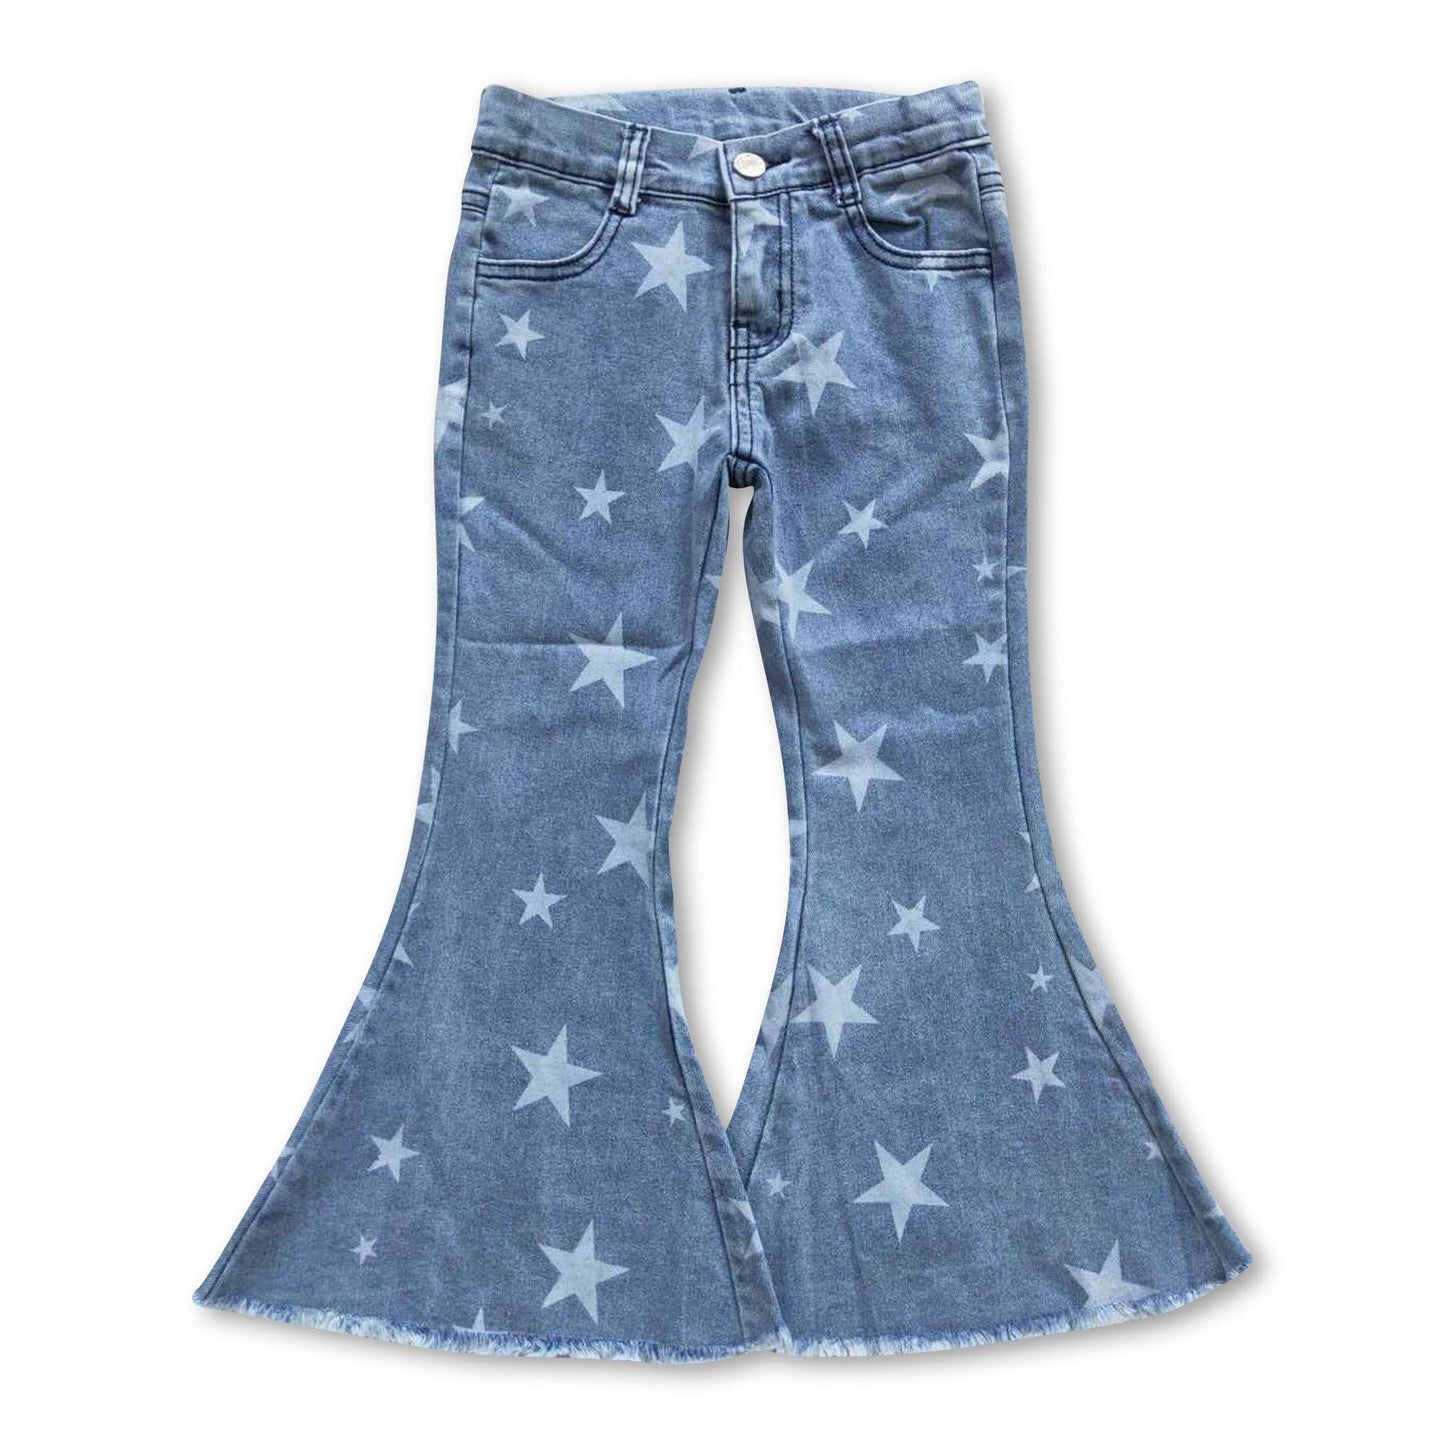 Stars print pockets elastic waist baby girls jeans